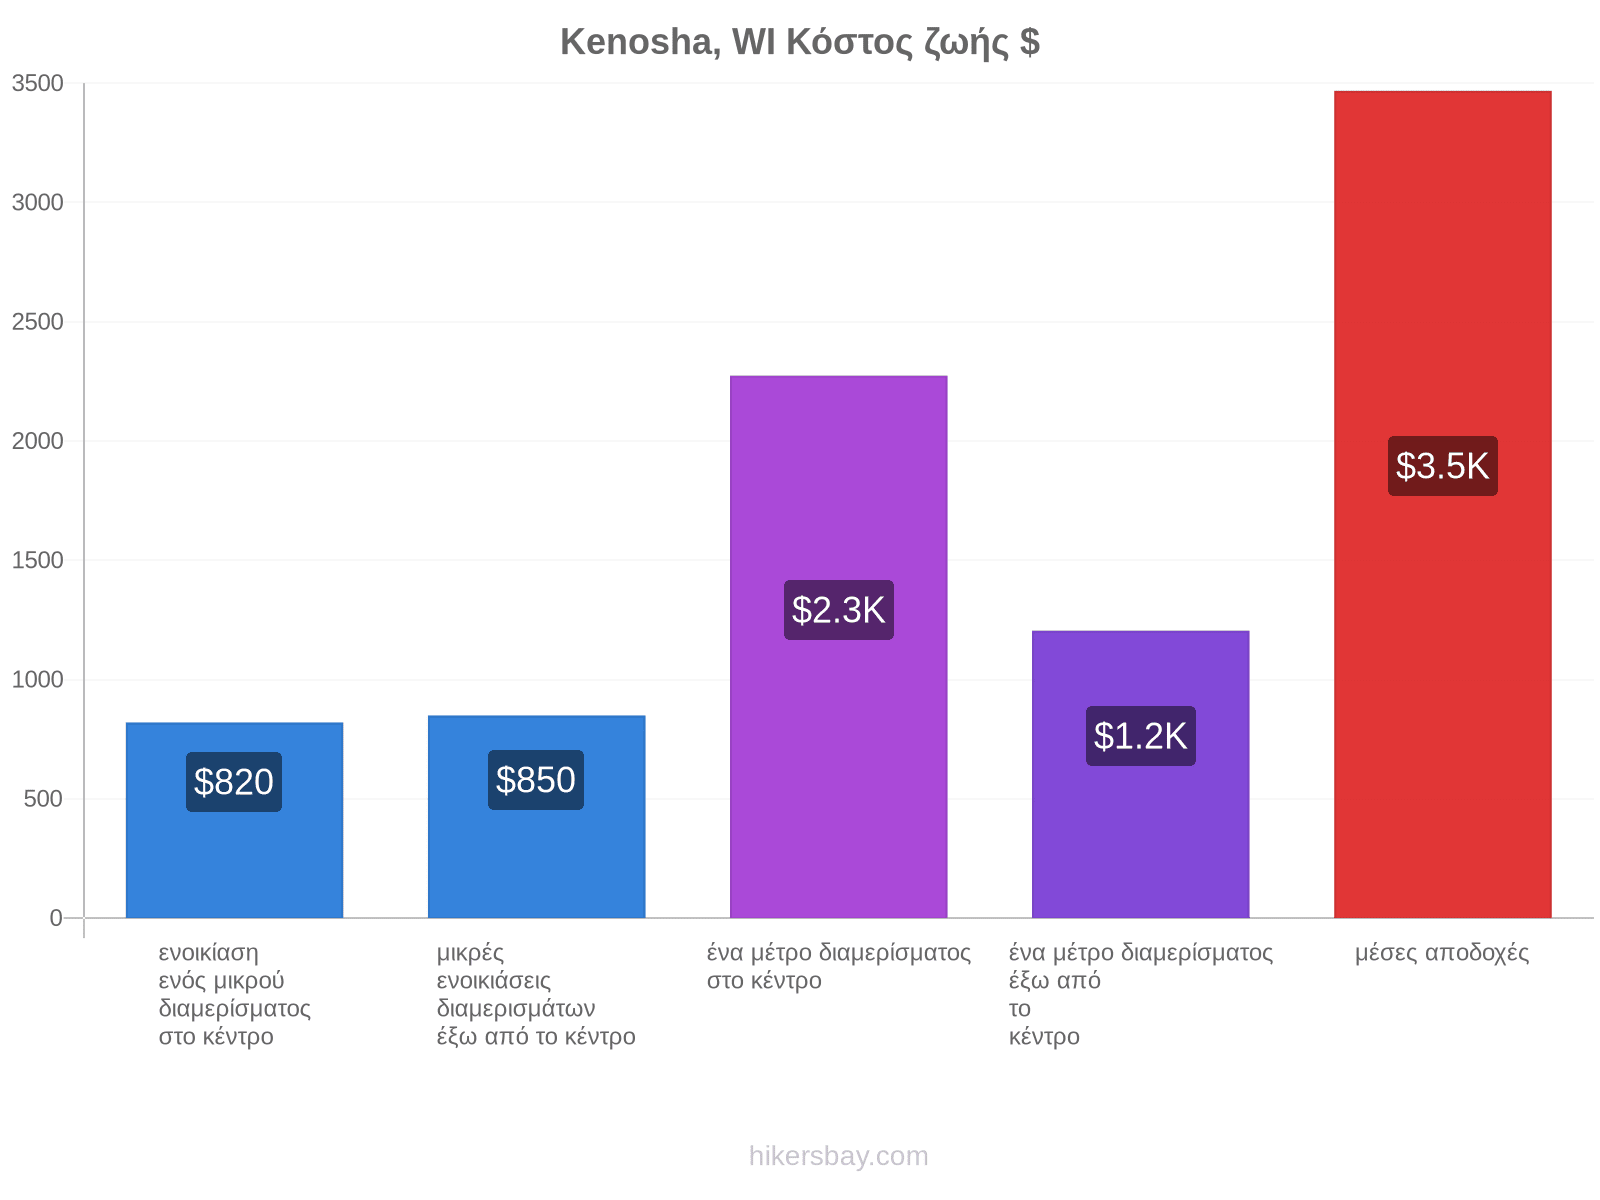 Kenosha, WI κόστος ζωής hikersbay.com